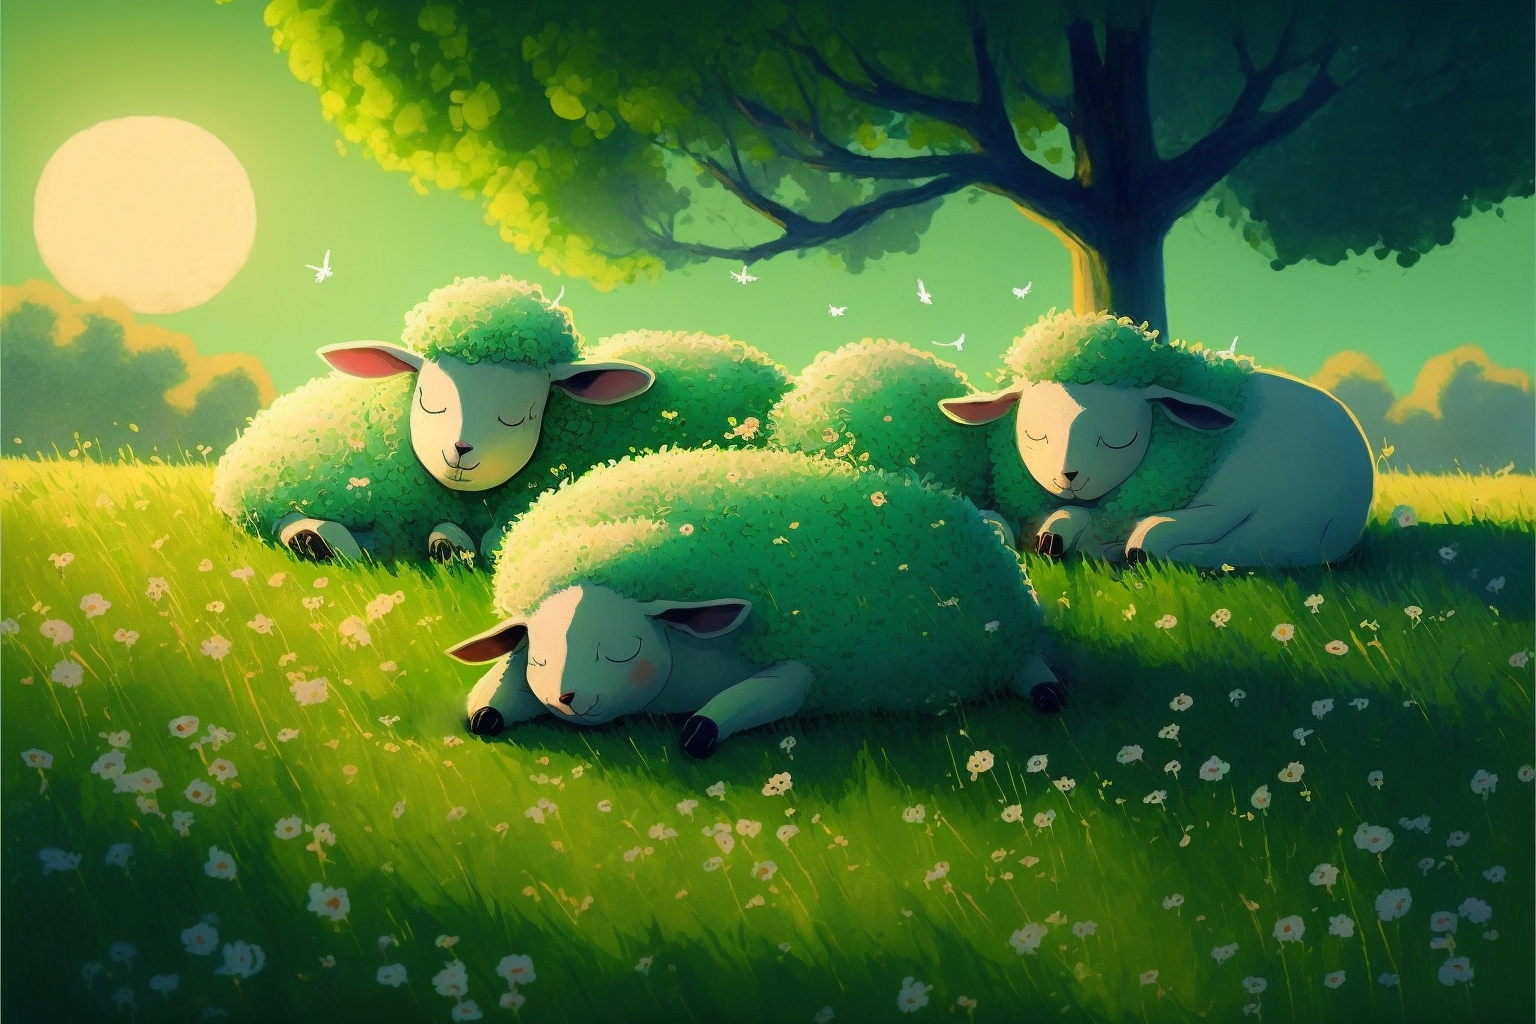 The Sleepy Sheep's Storytime